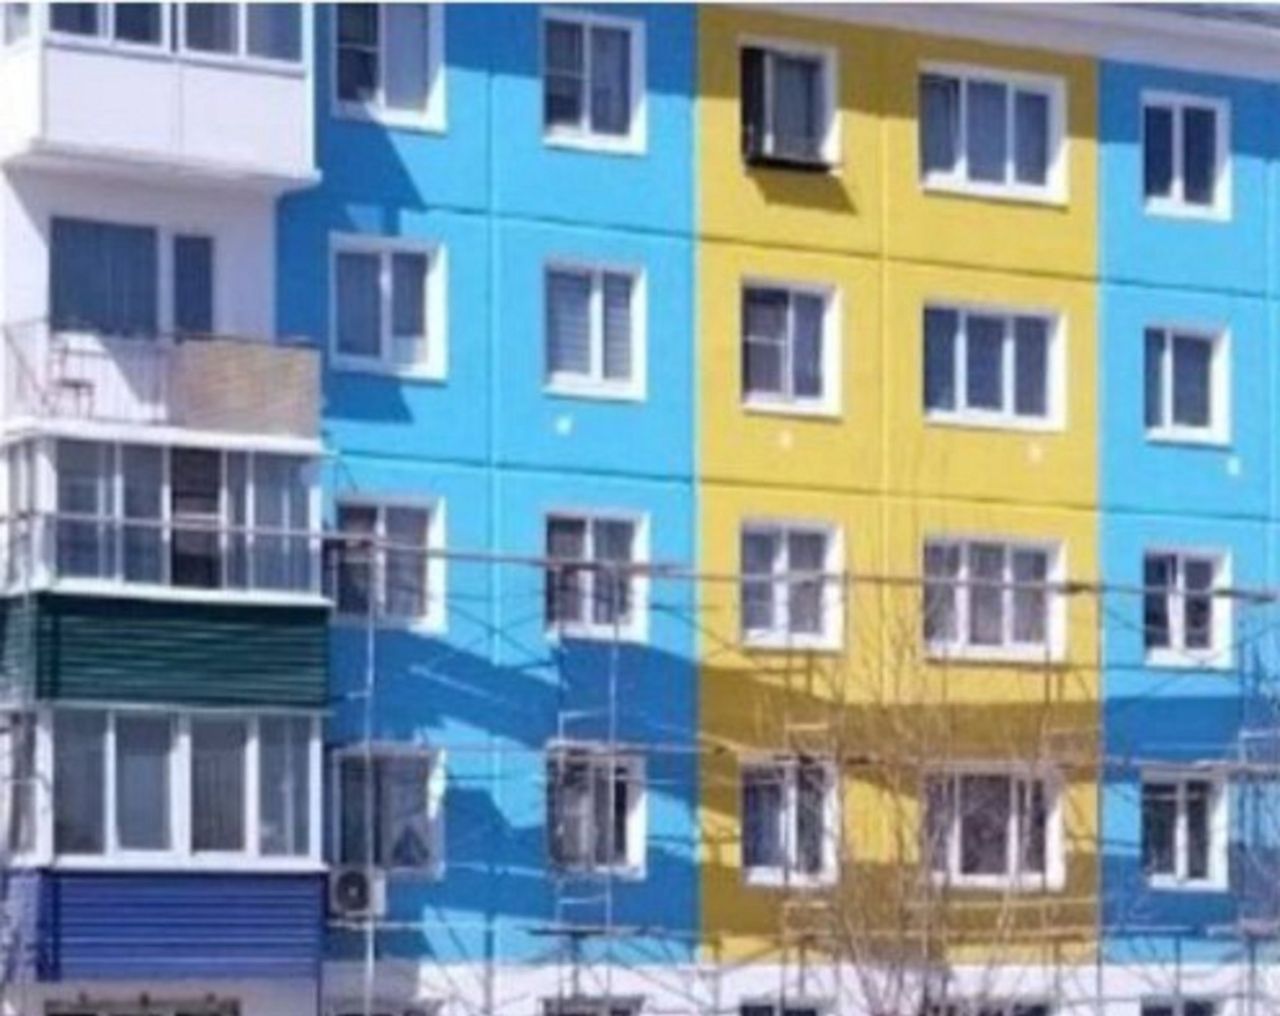 Russian outrage over Ukrainian colours on Irkutsk building